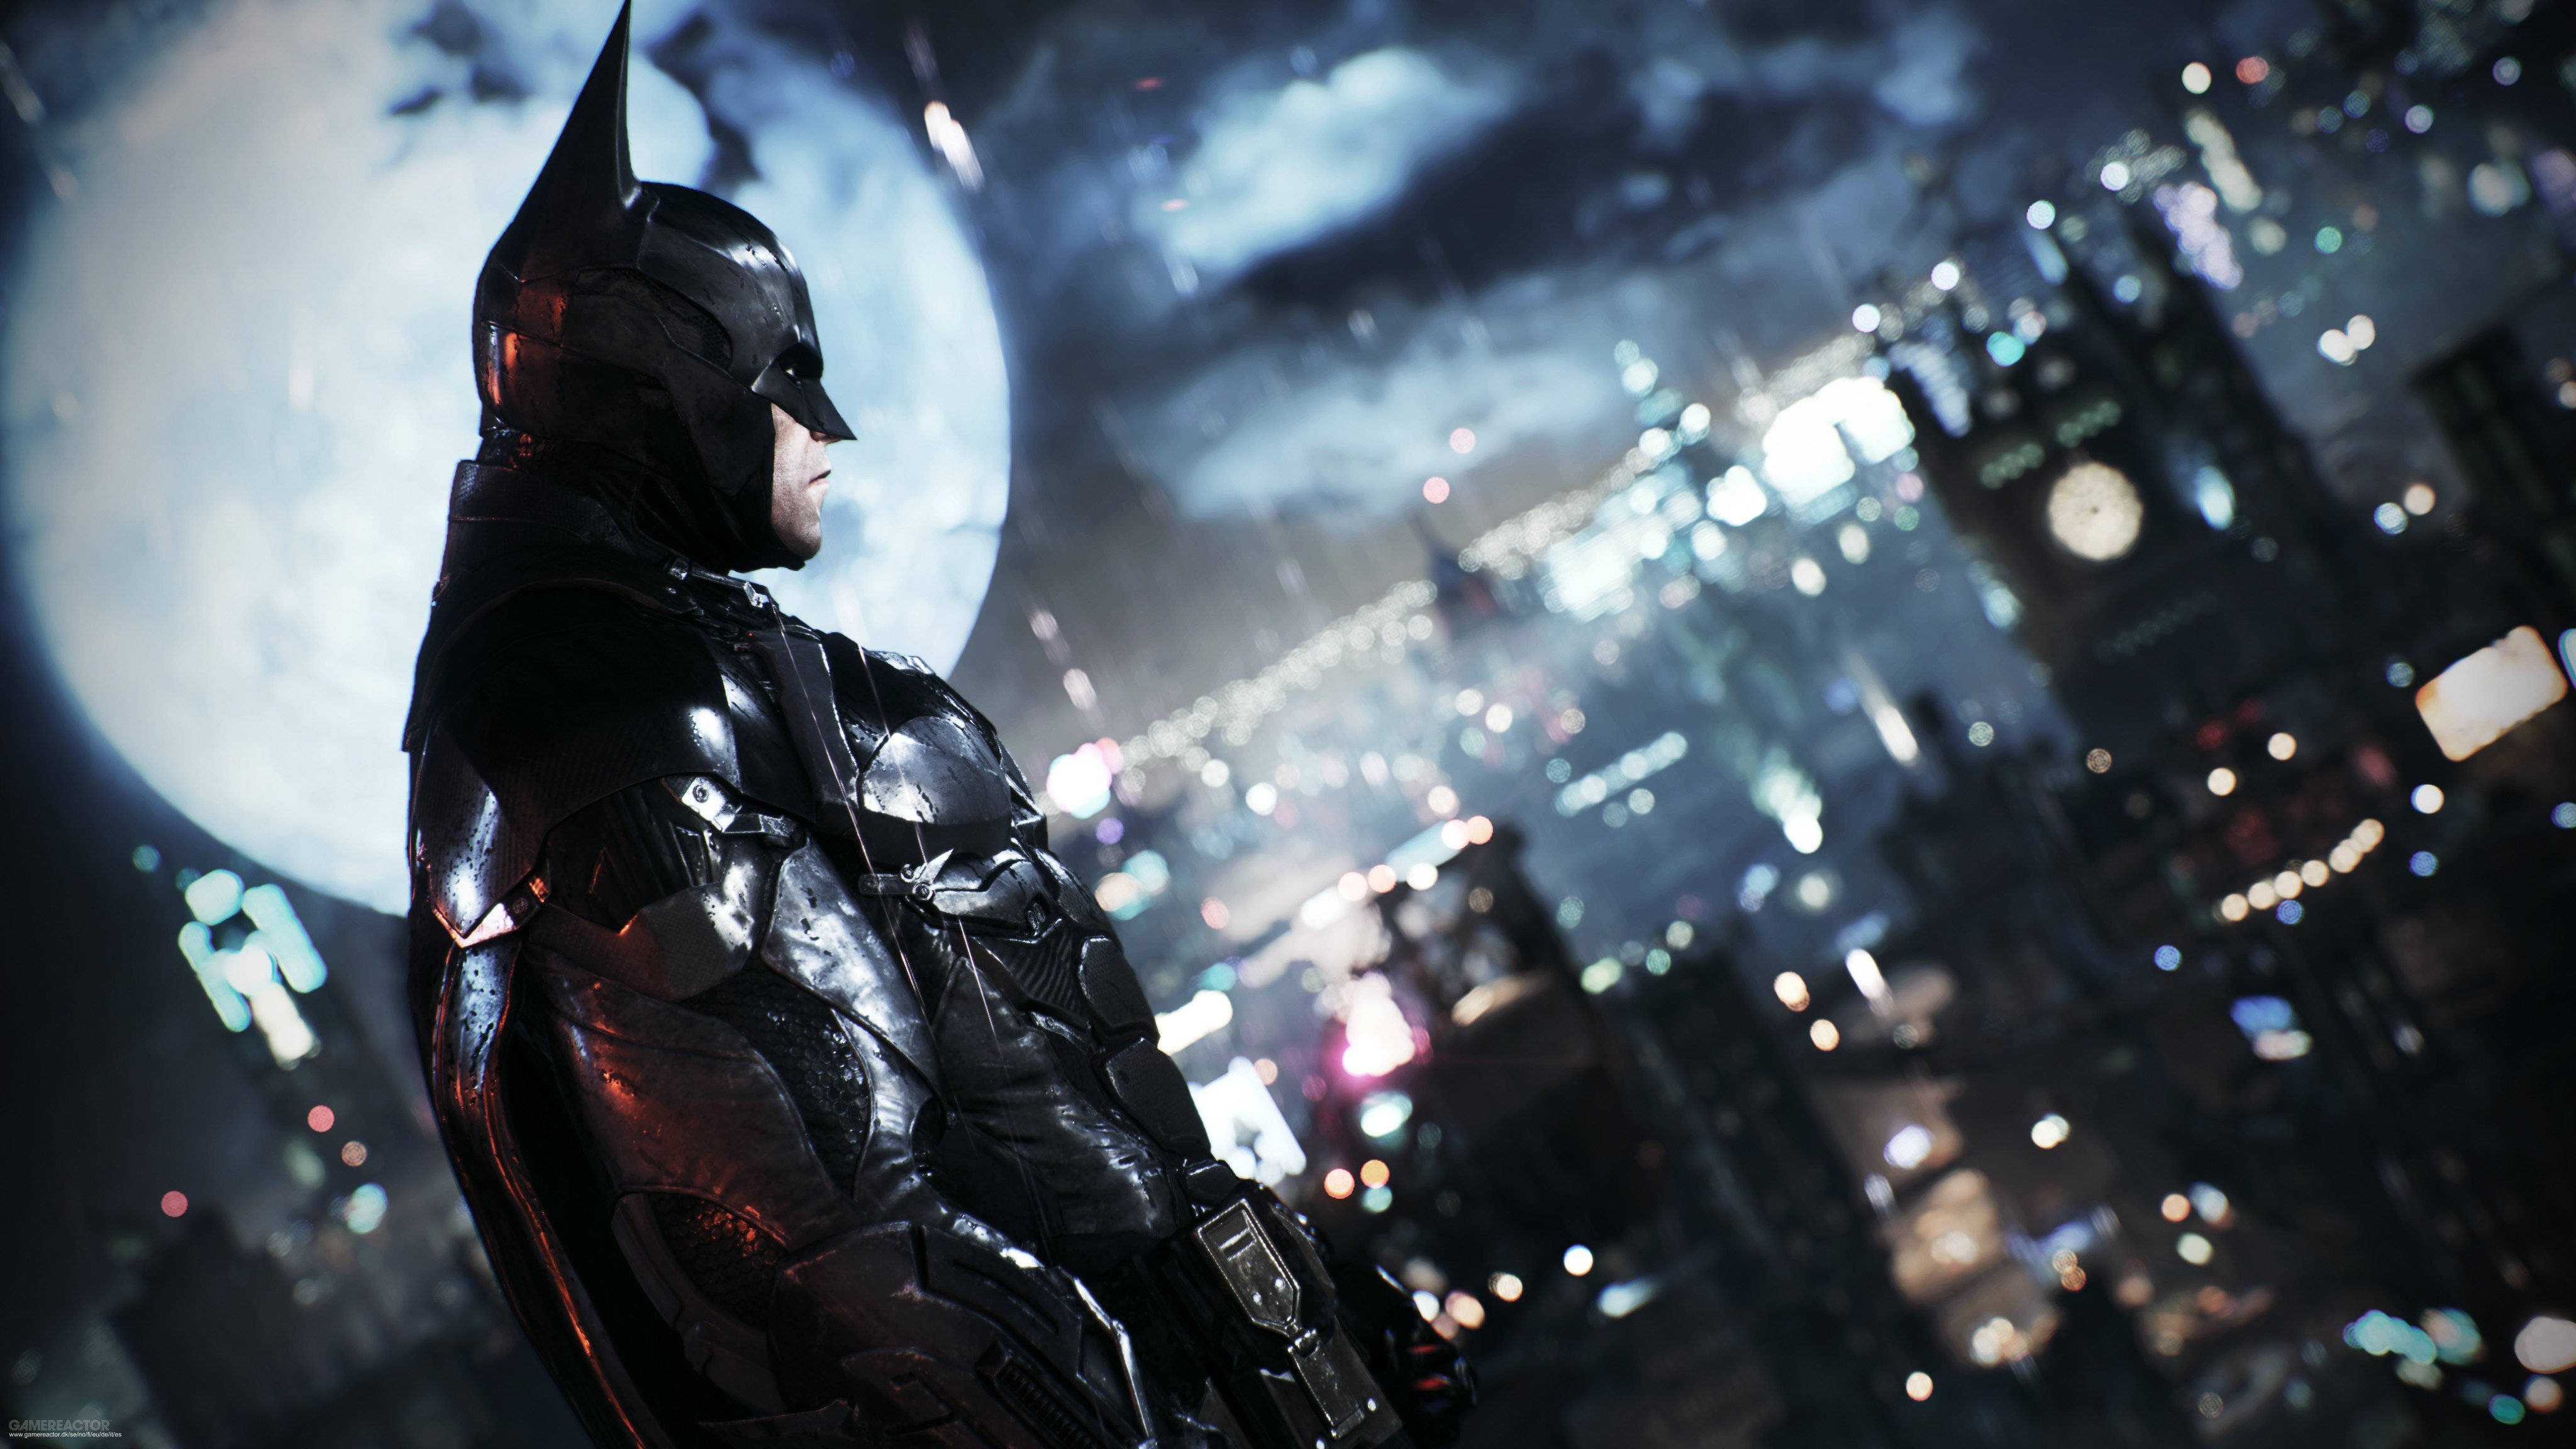 Download The Dark Knight Over Gotham City Wallpaper 